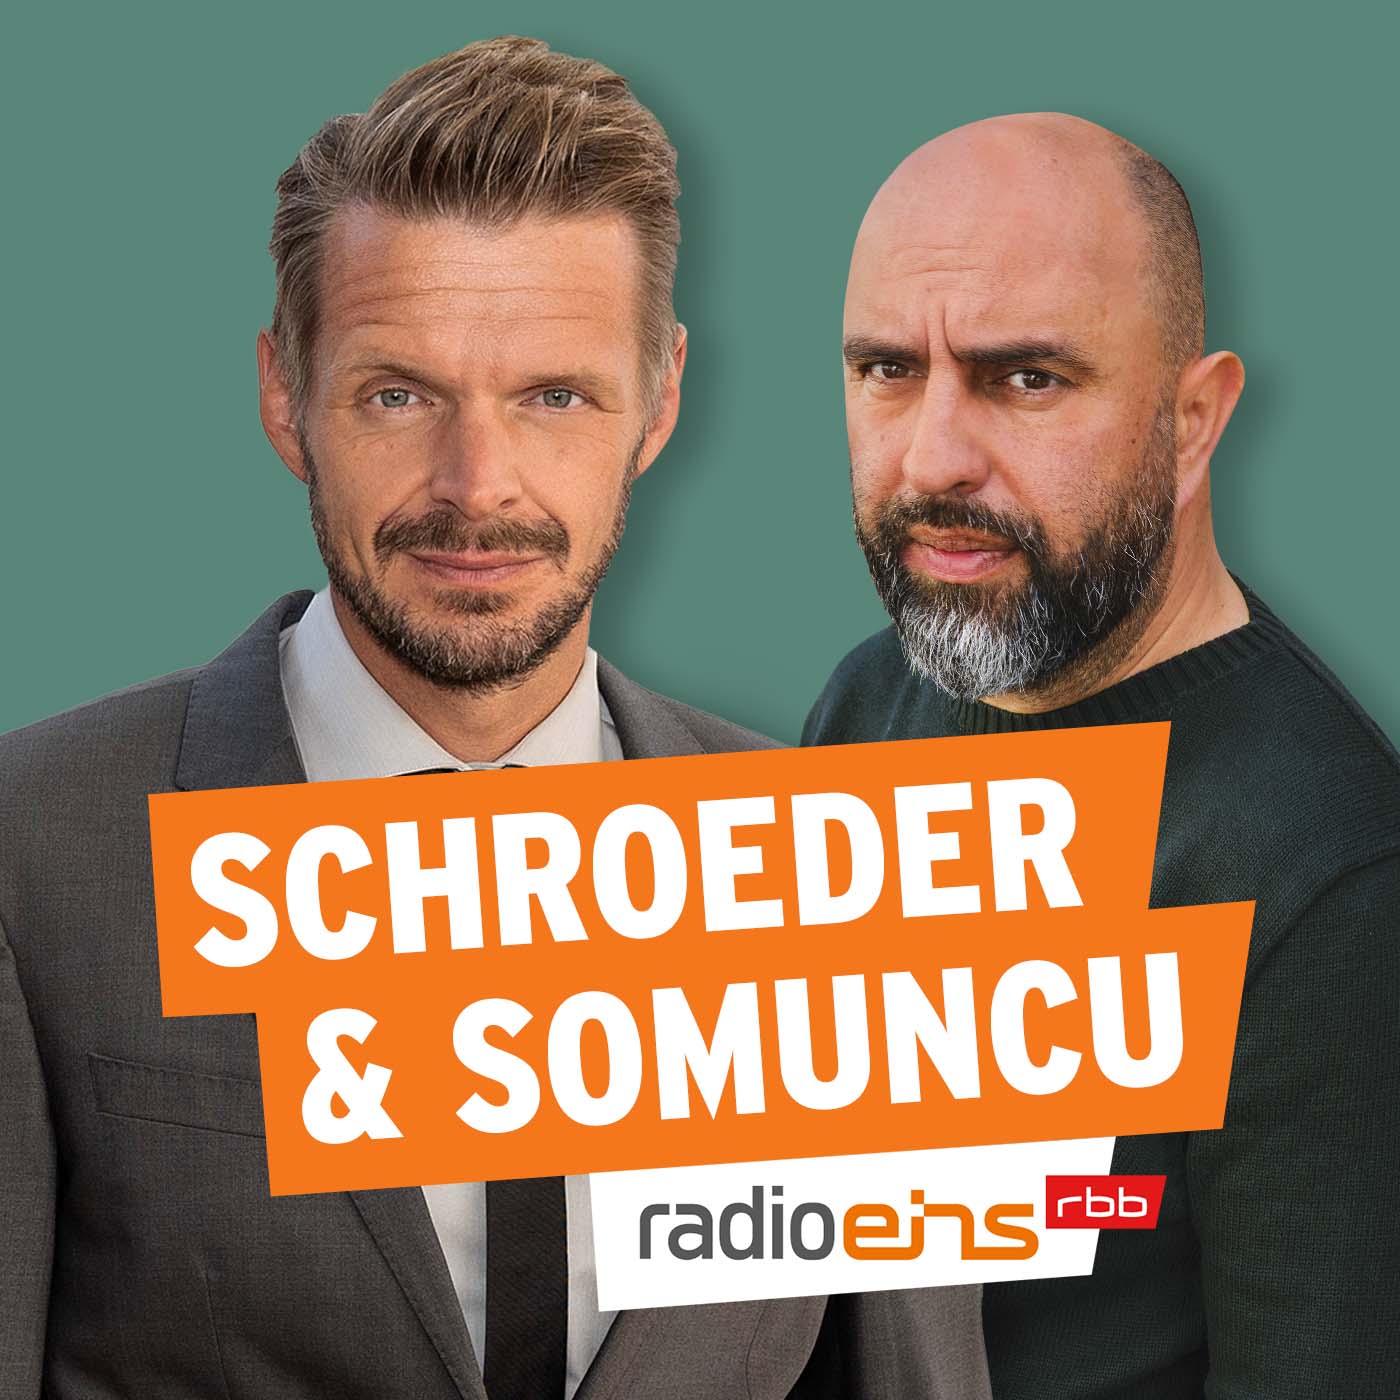 Andere Podcasts, Schweigender Scholz, Neidgesellschaft